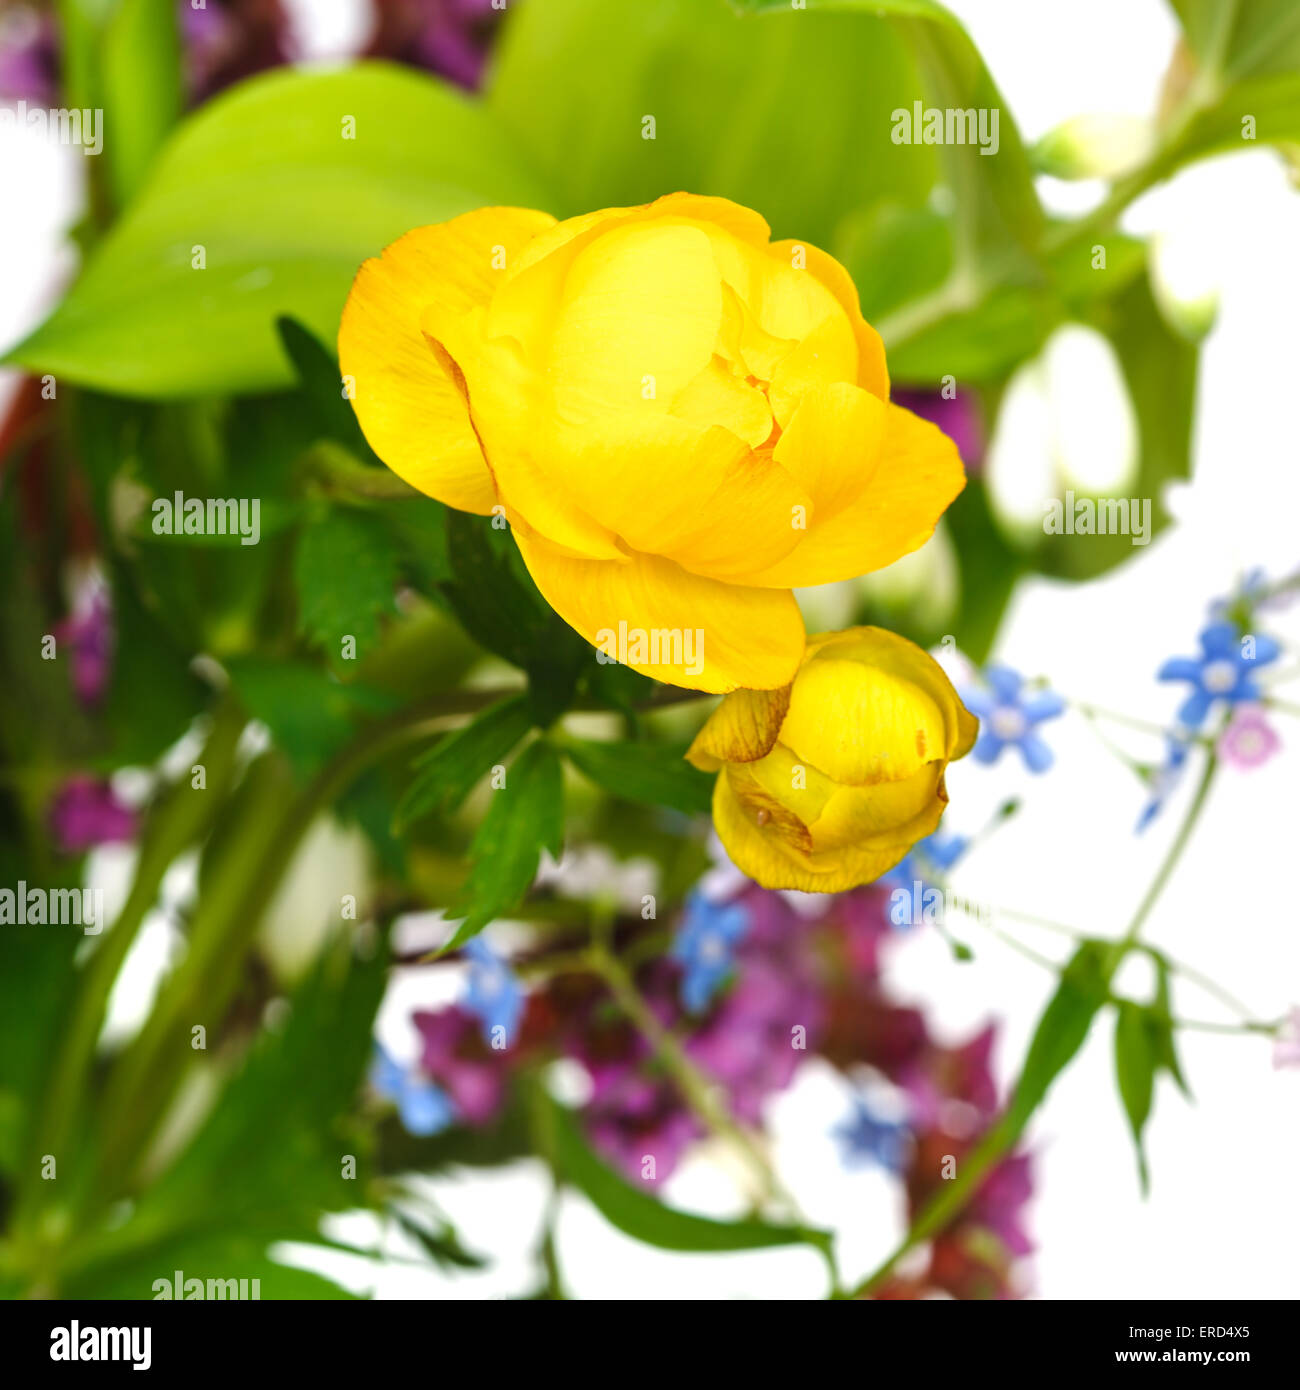 fresh yellow trollius flowers in posy close up Stock Photo